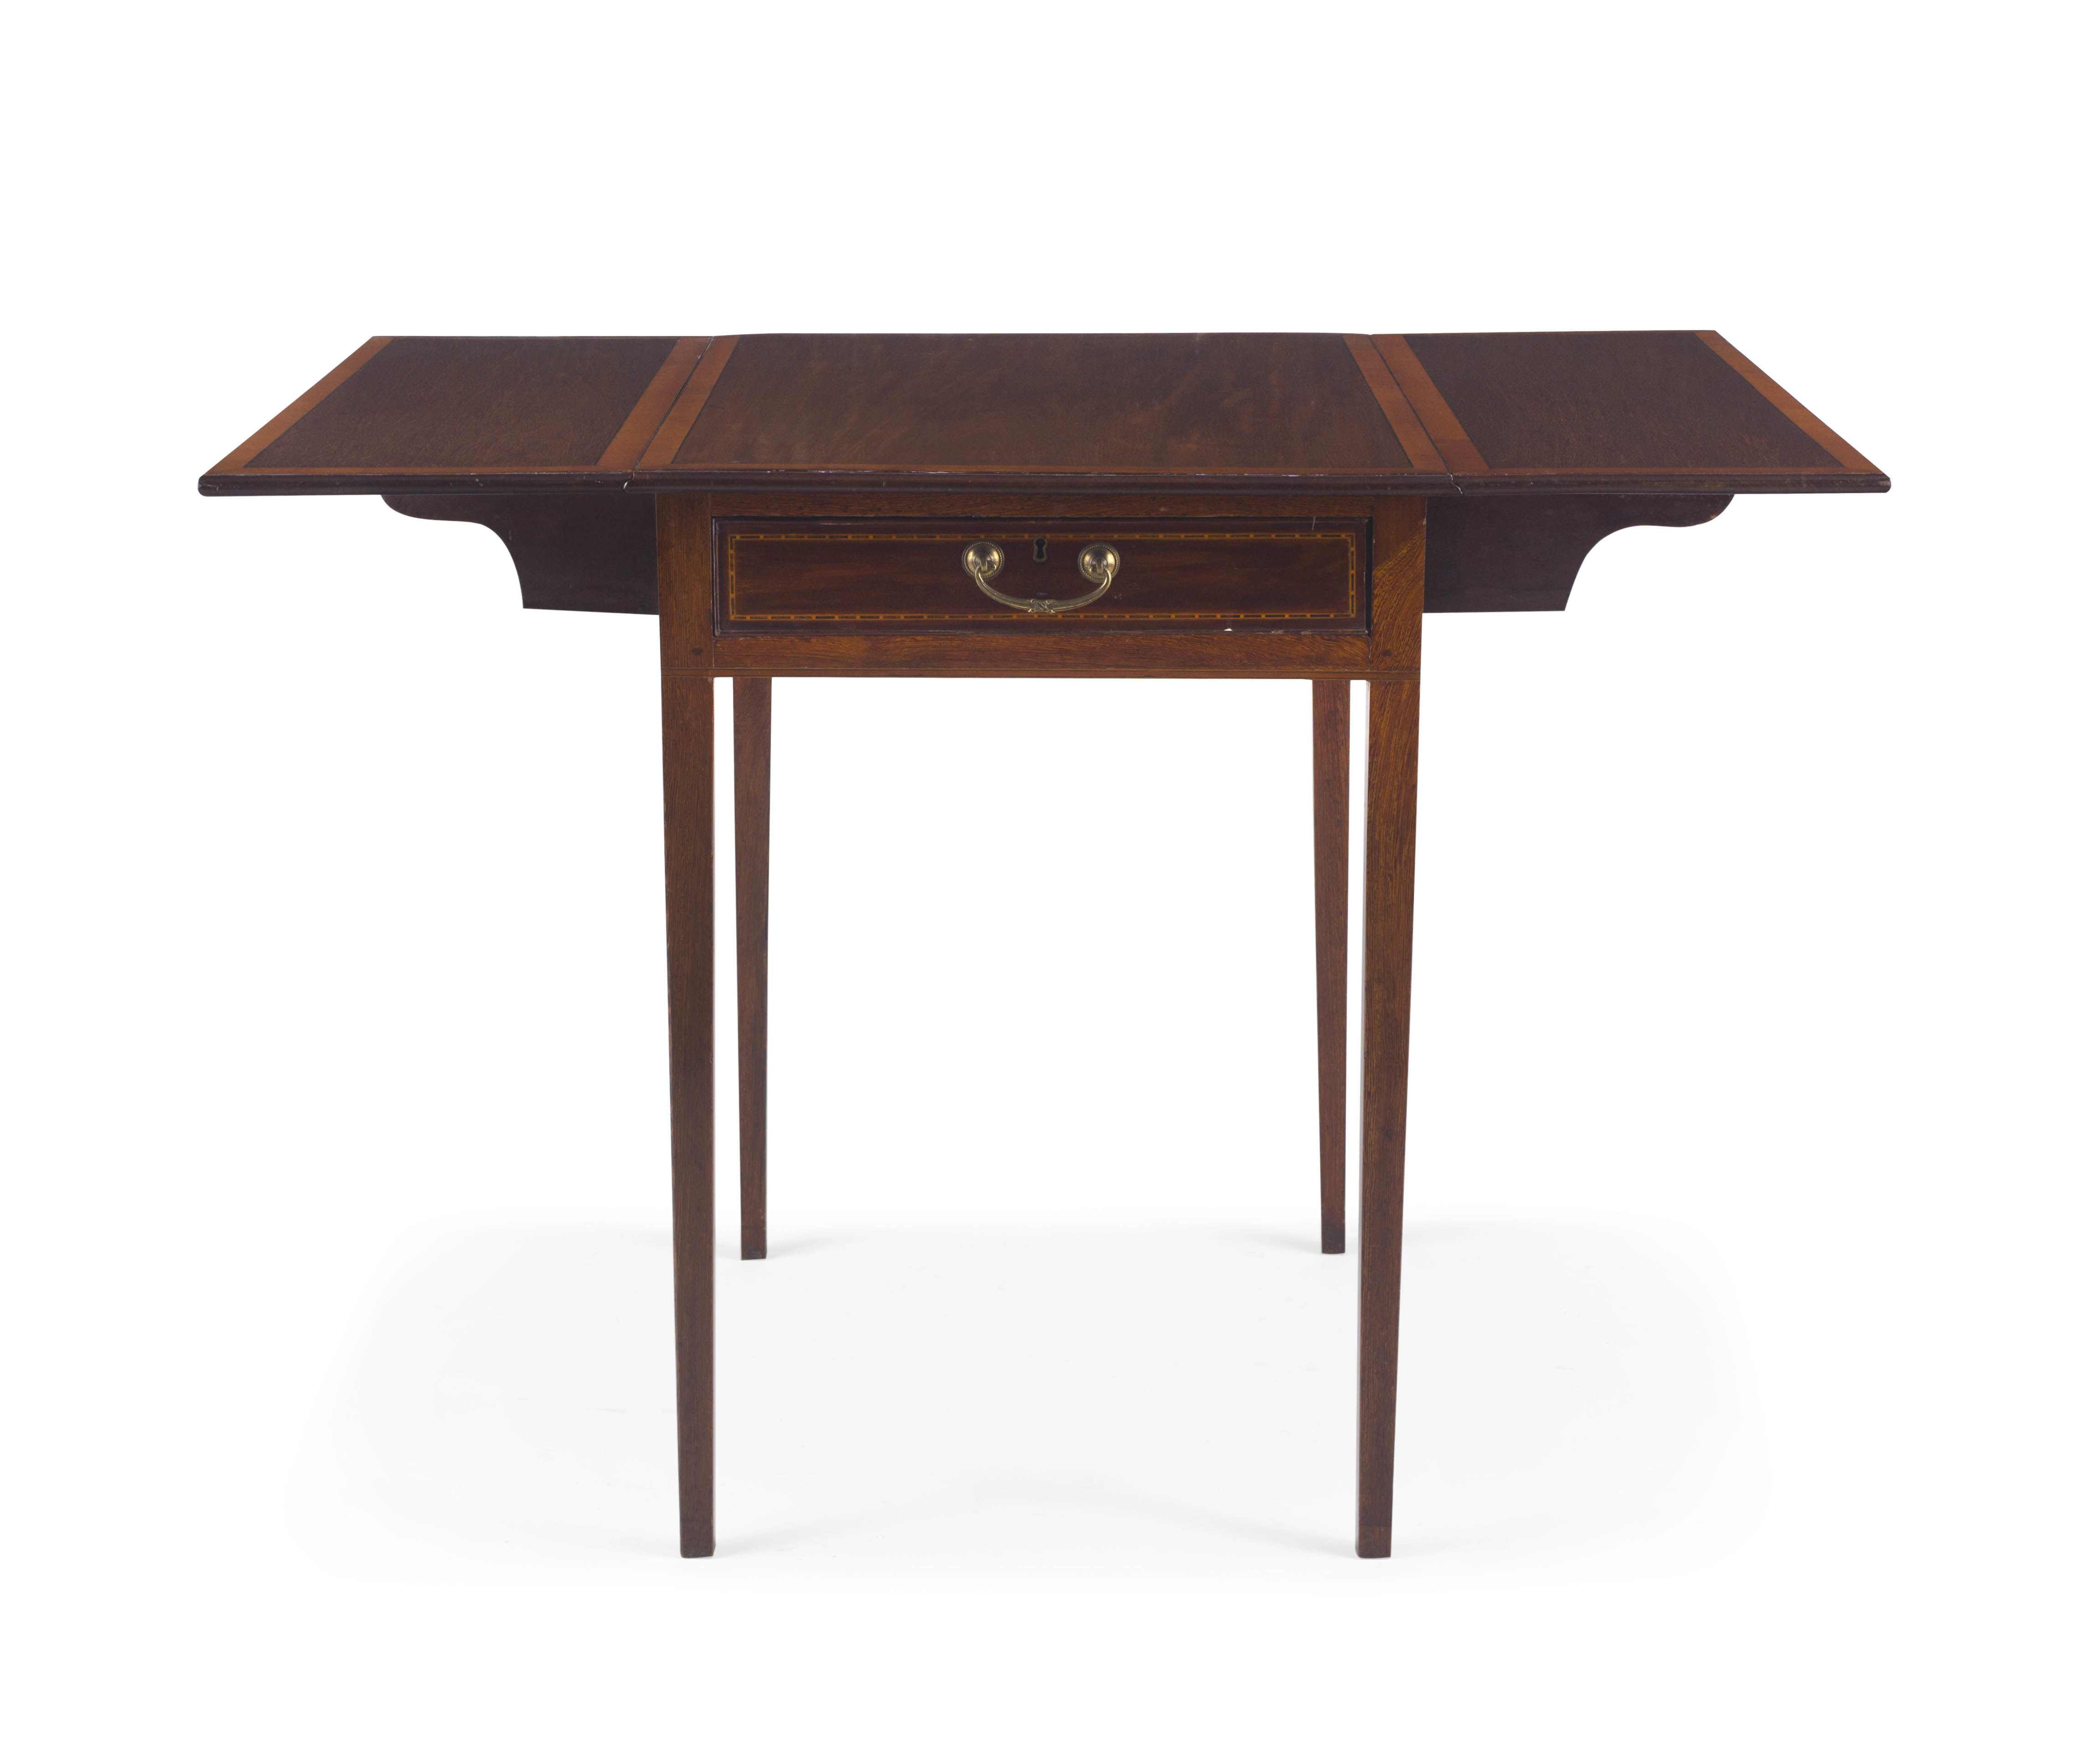 An Edwardian mahogany and satinwood inlaid pembroke table